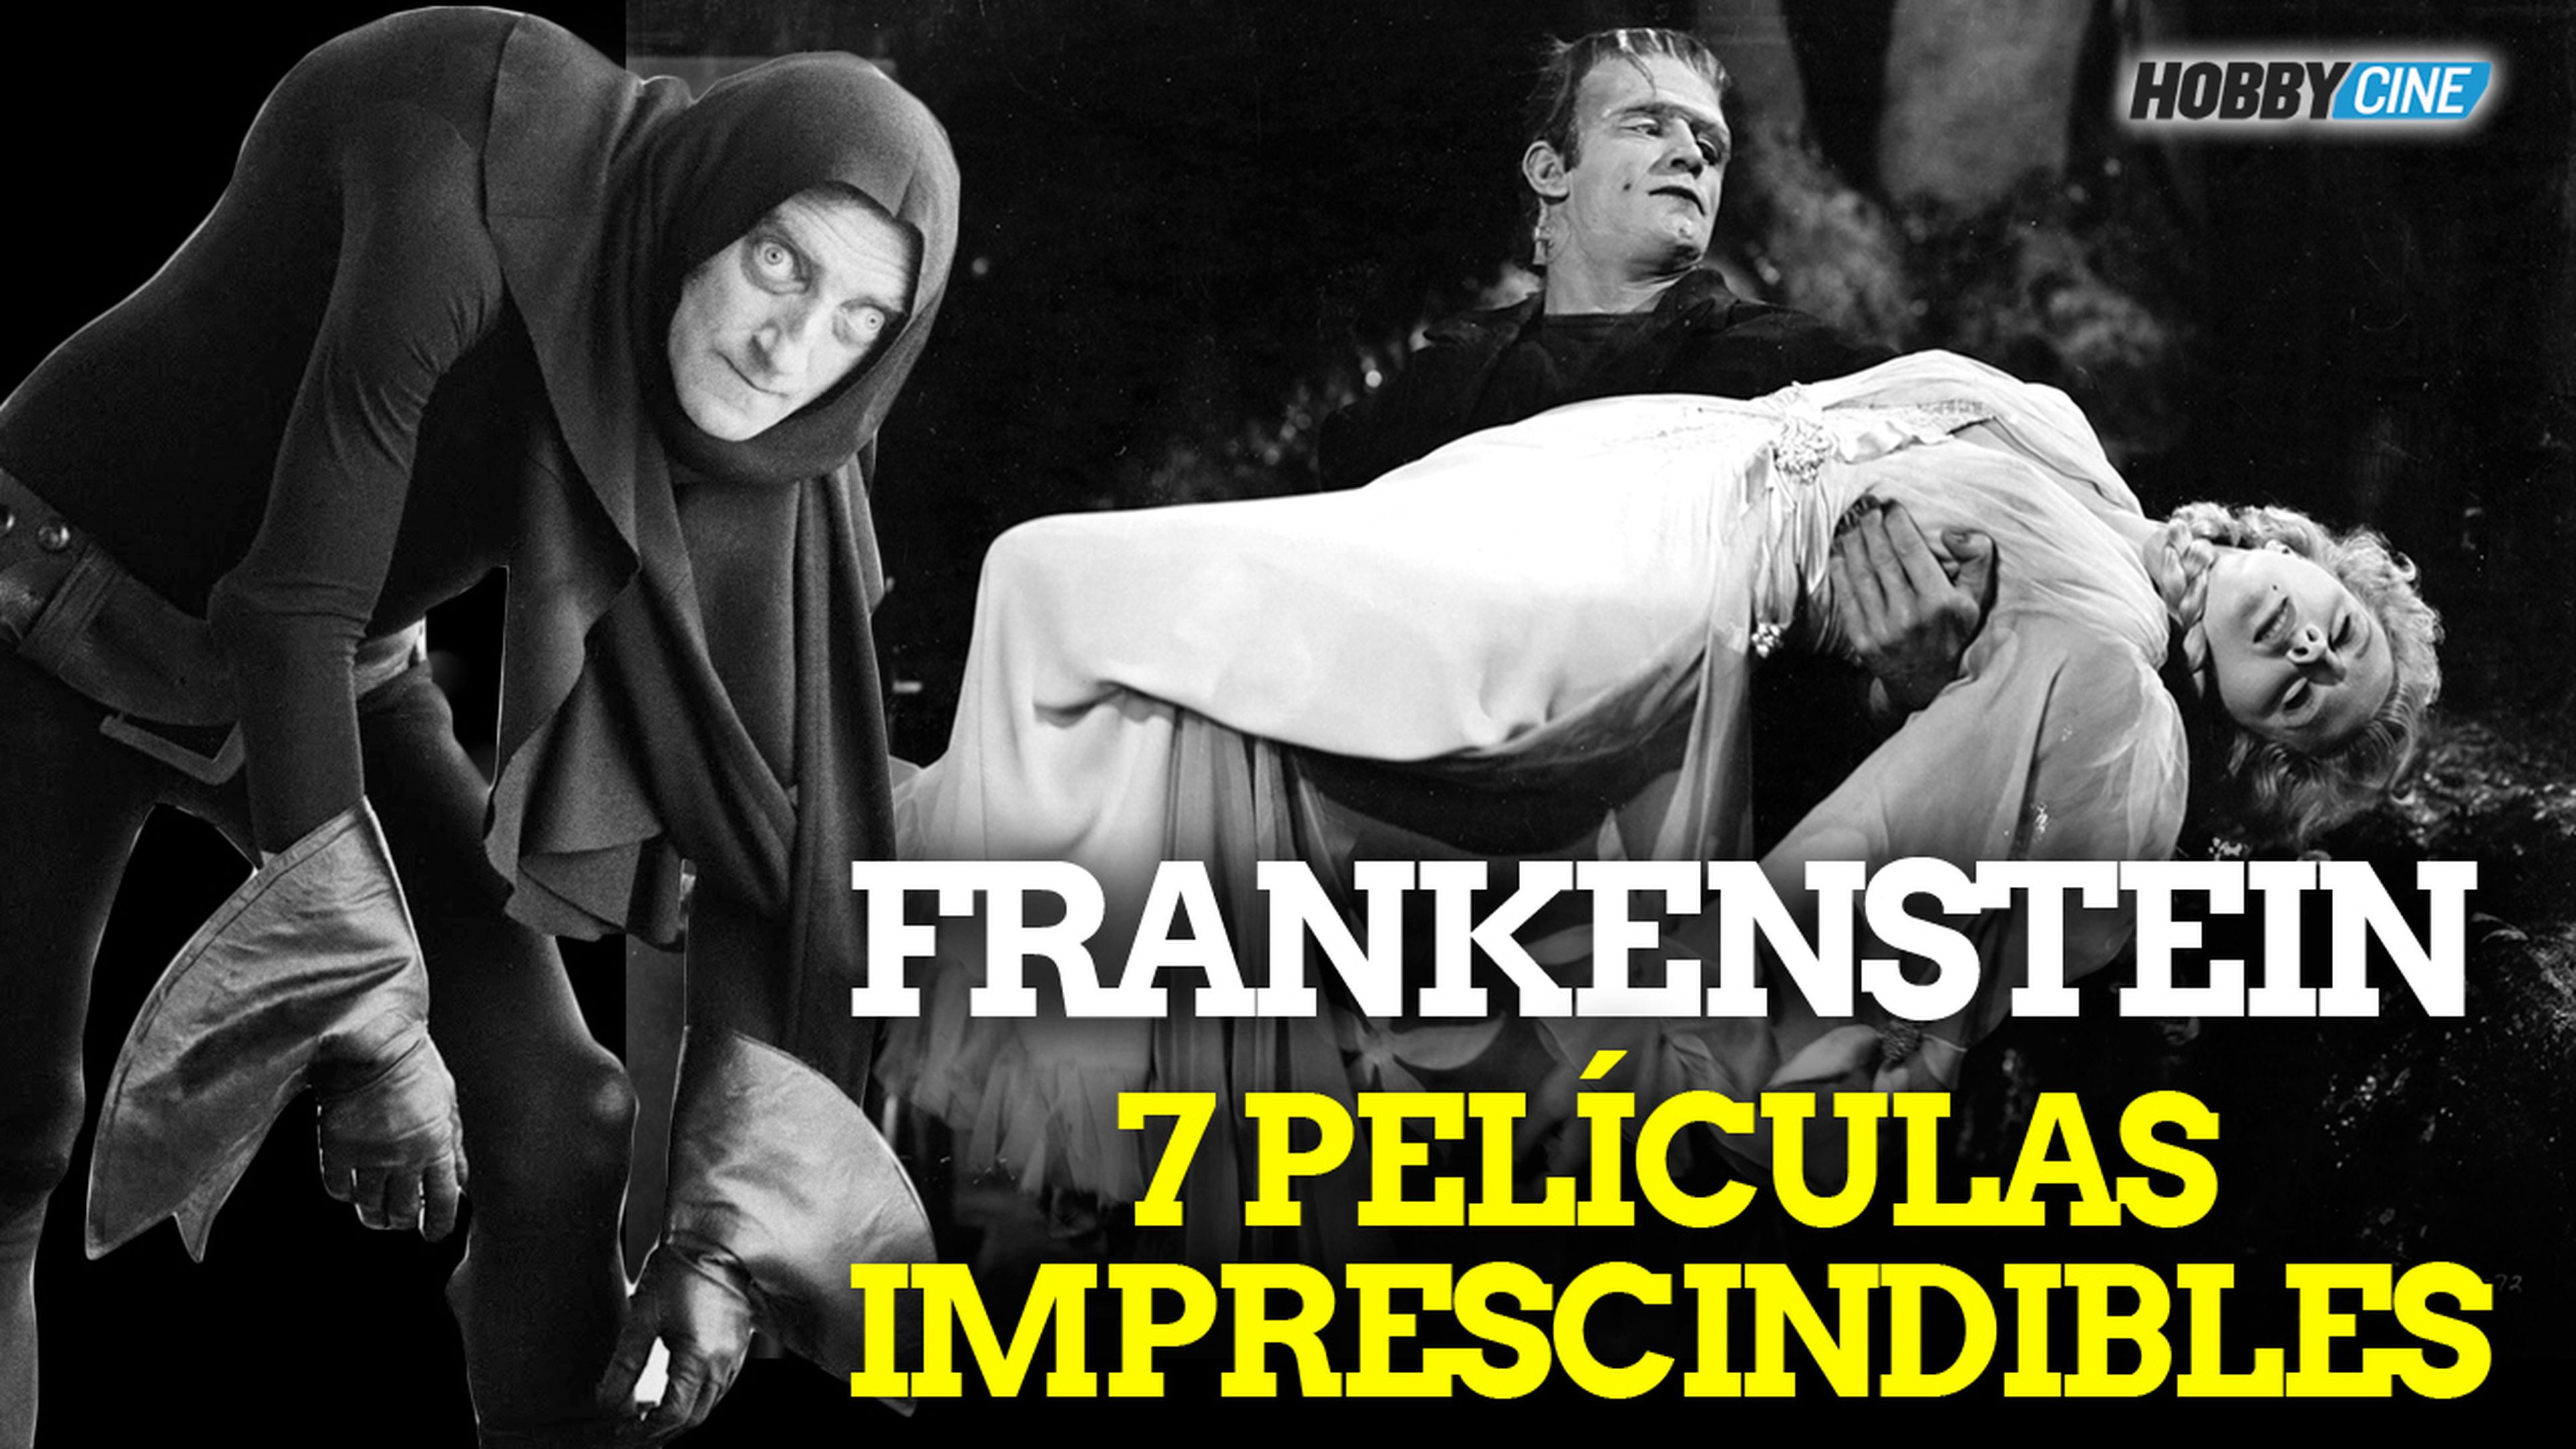 Frankenstein - 7 películas imprescindibles